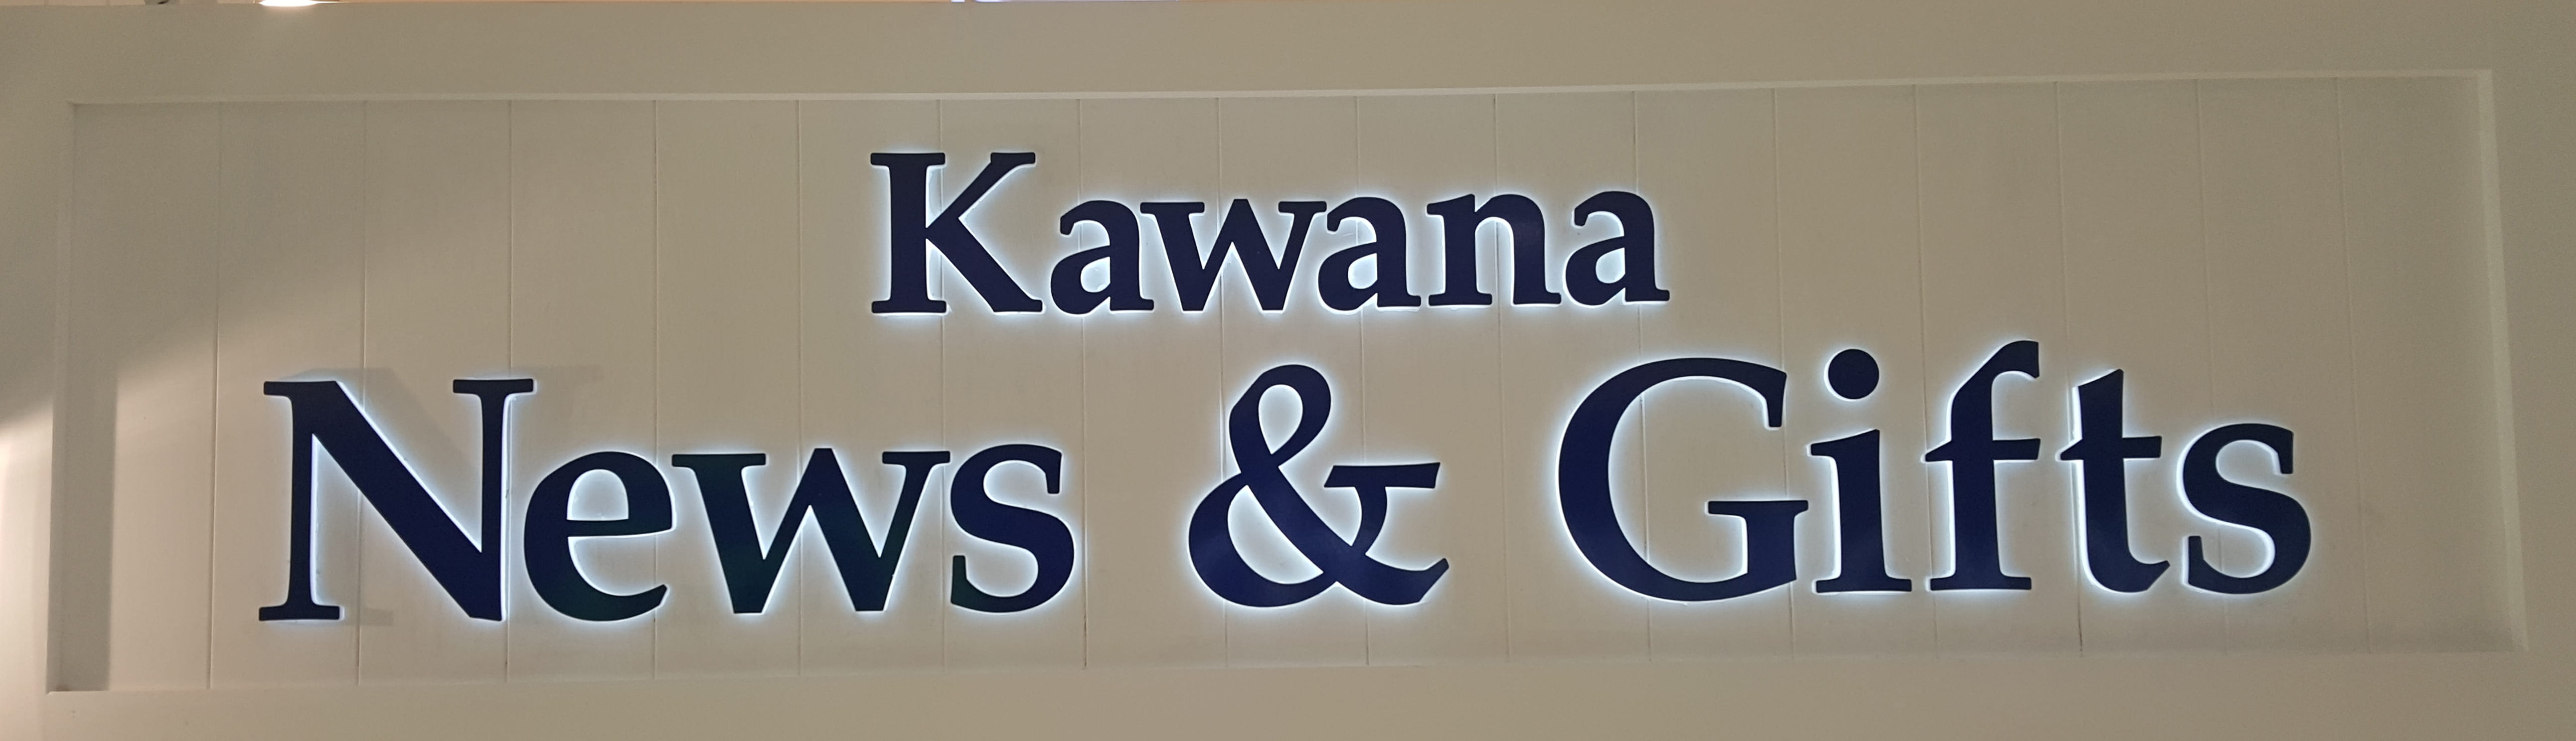 Kawana News & Gifts